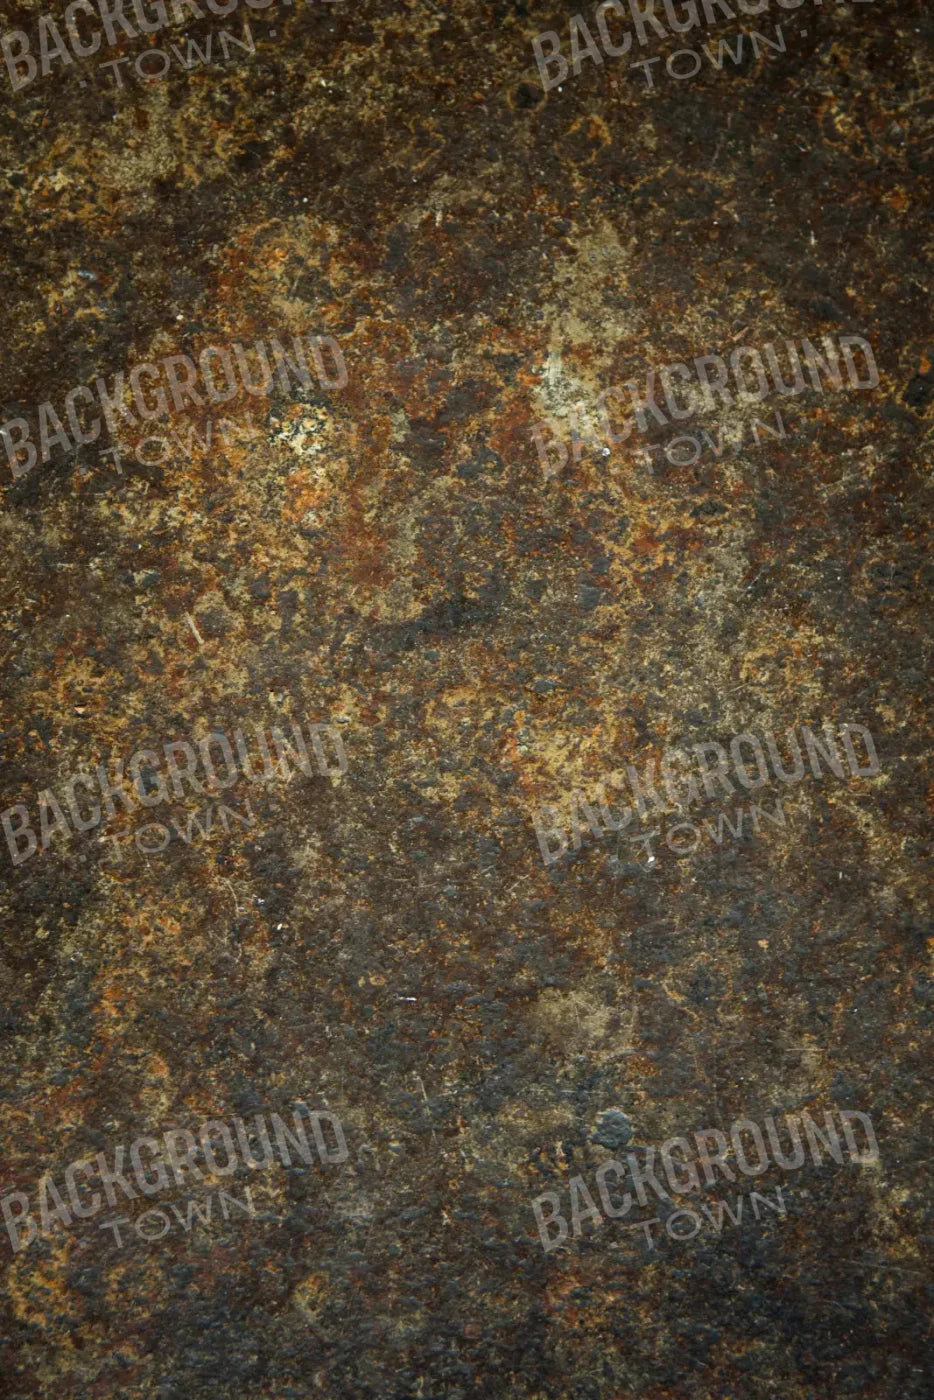 Brown Stone Floor 4X5 Rubbermat ( 48 X 60 Inch ) Backdrop